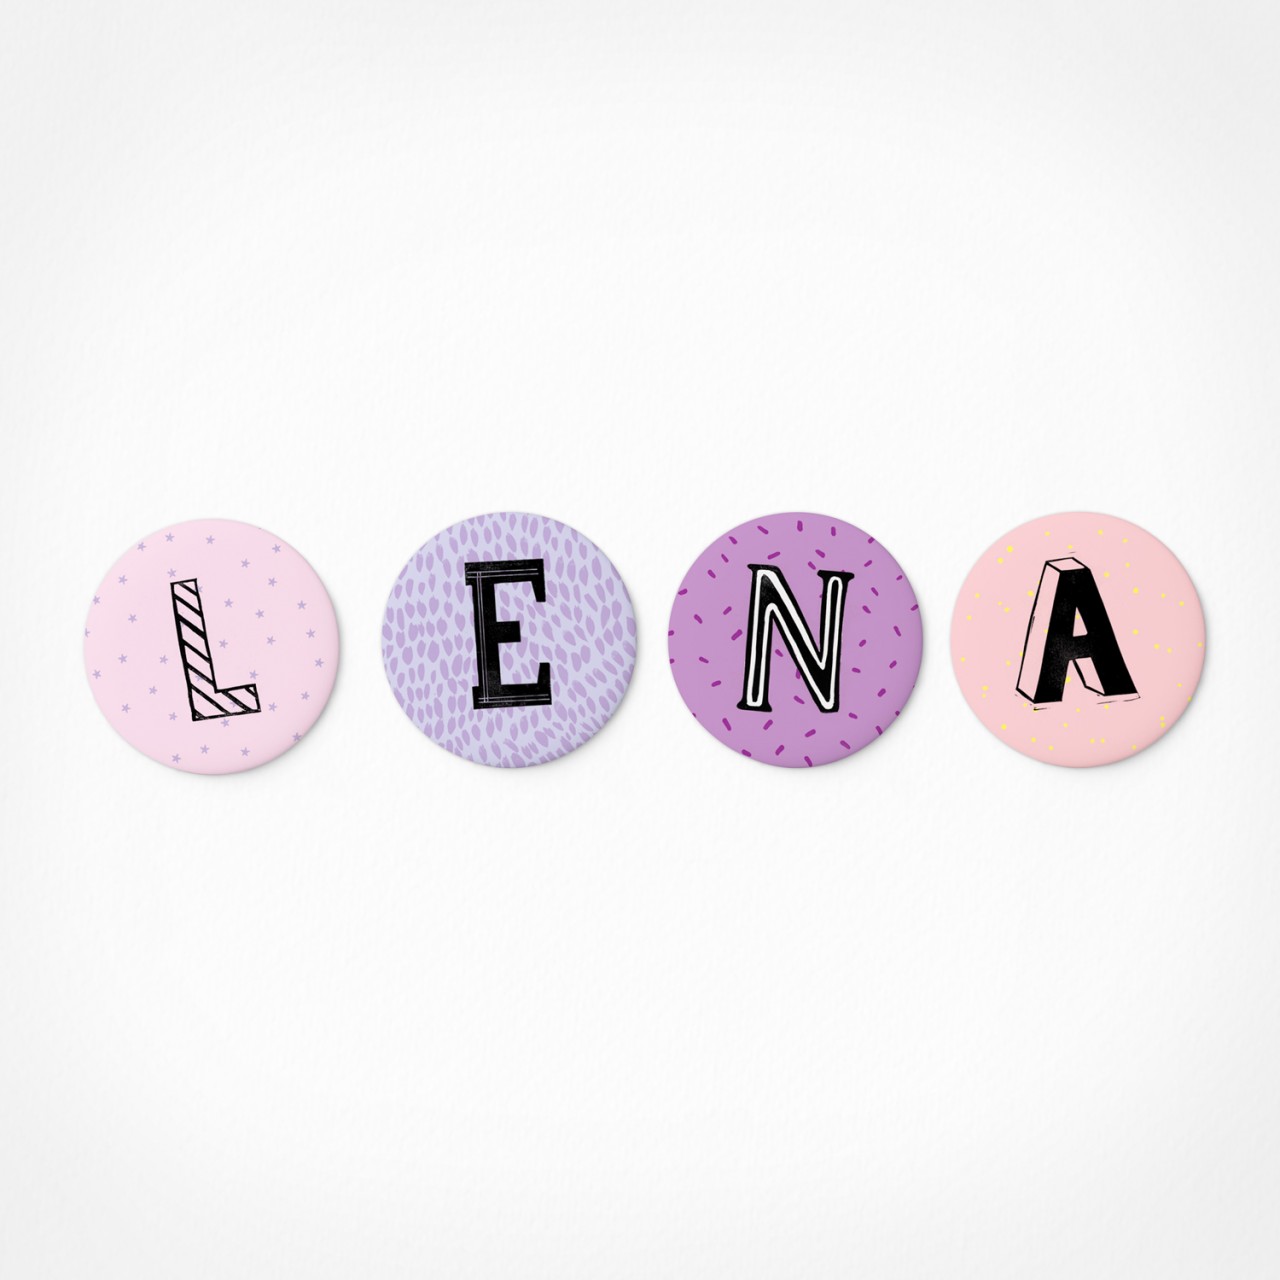 Lena | Magnetbuchstaben Set | 4 Magnete